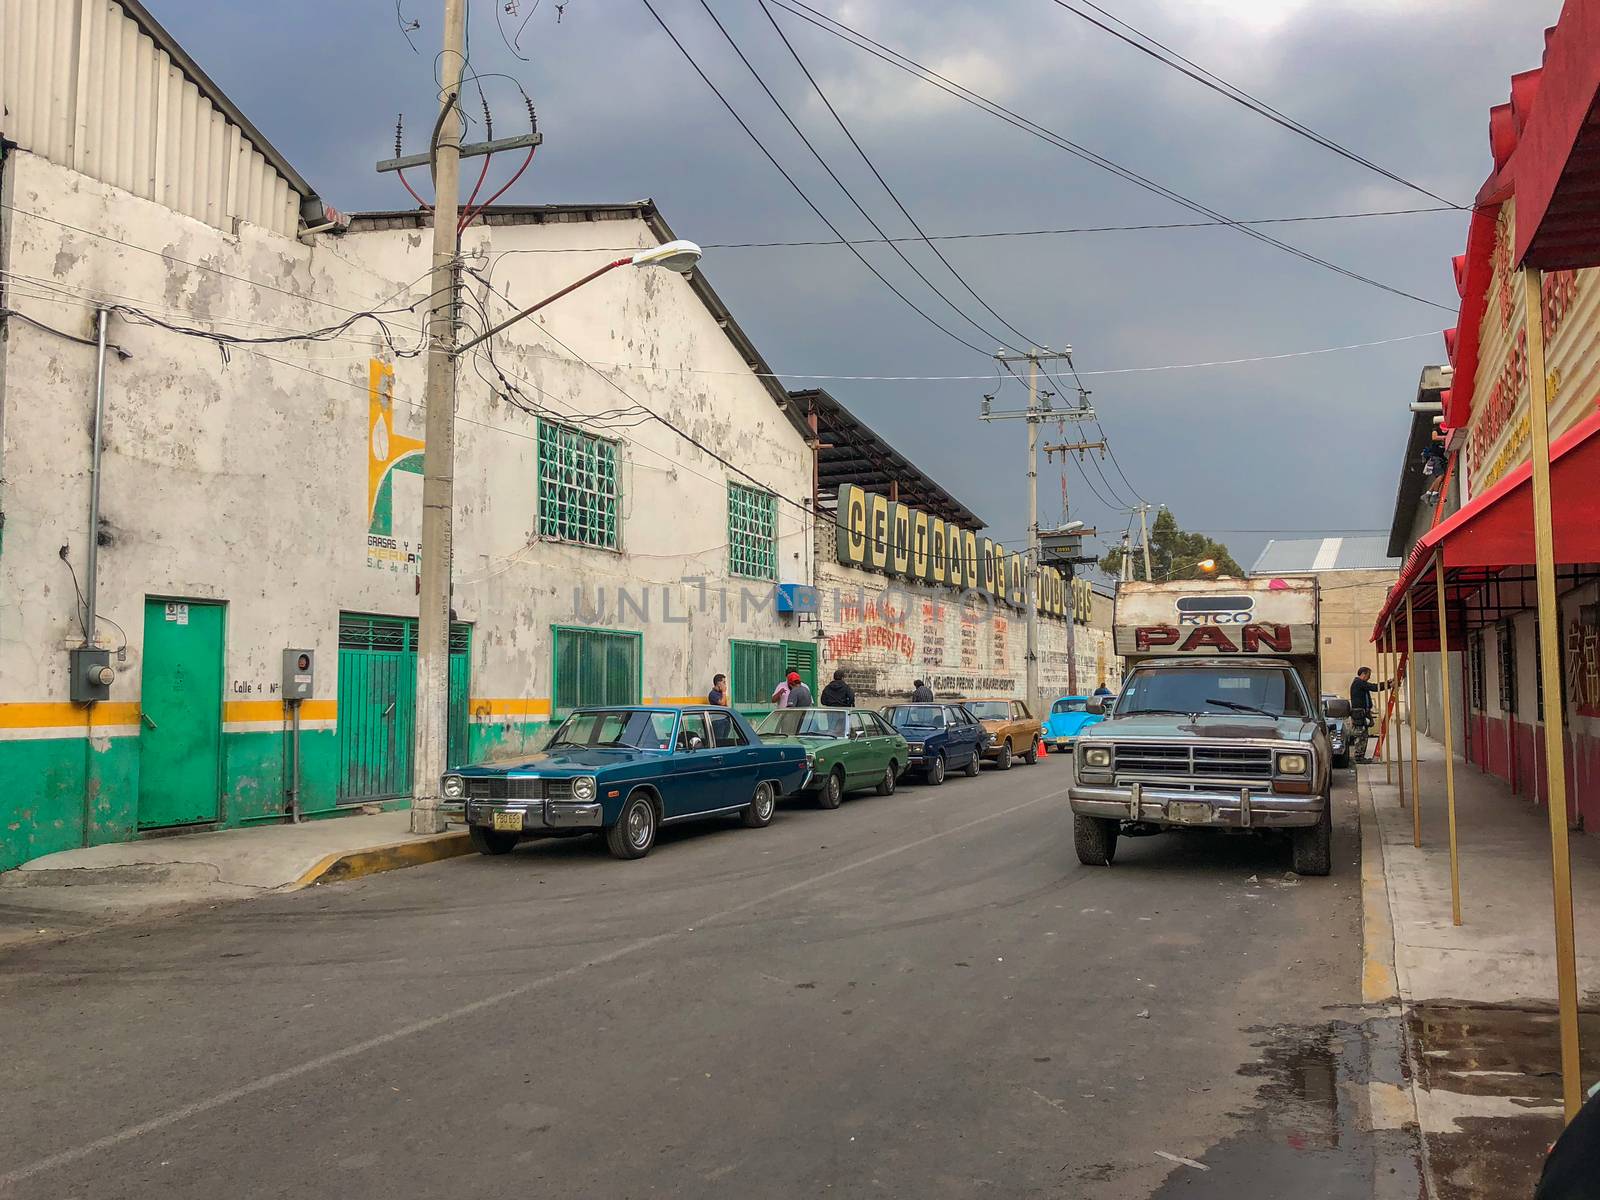 Street of a town in Mexico by leo_de_la_garza